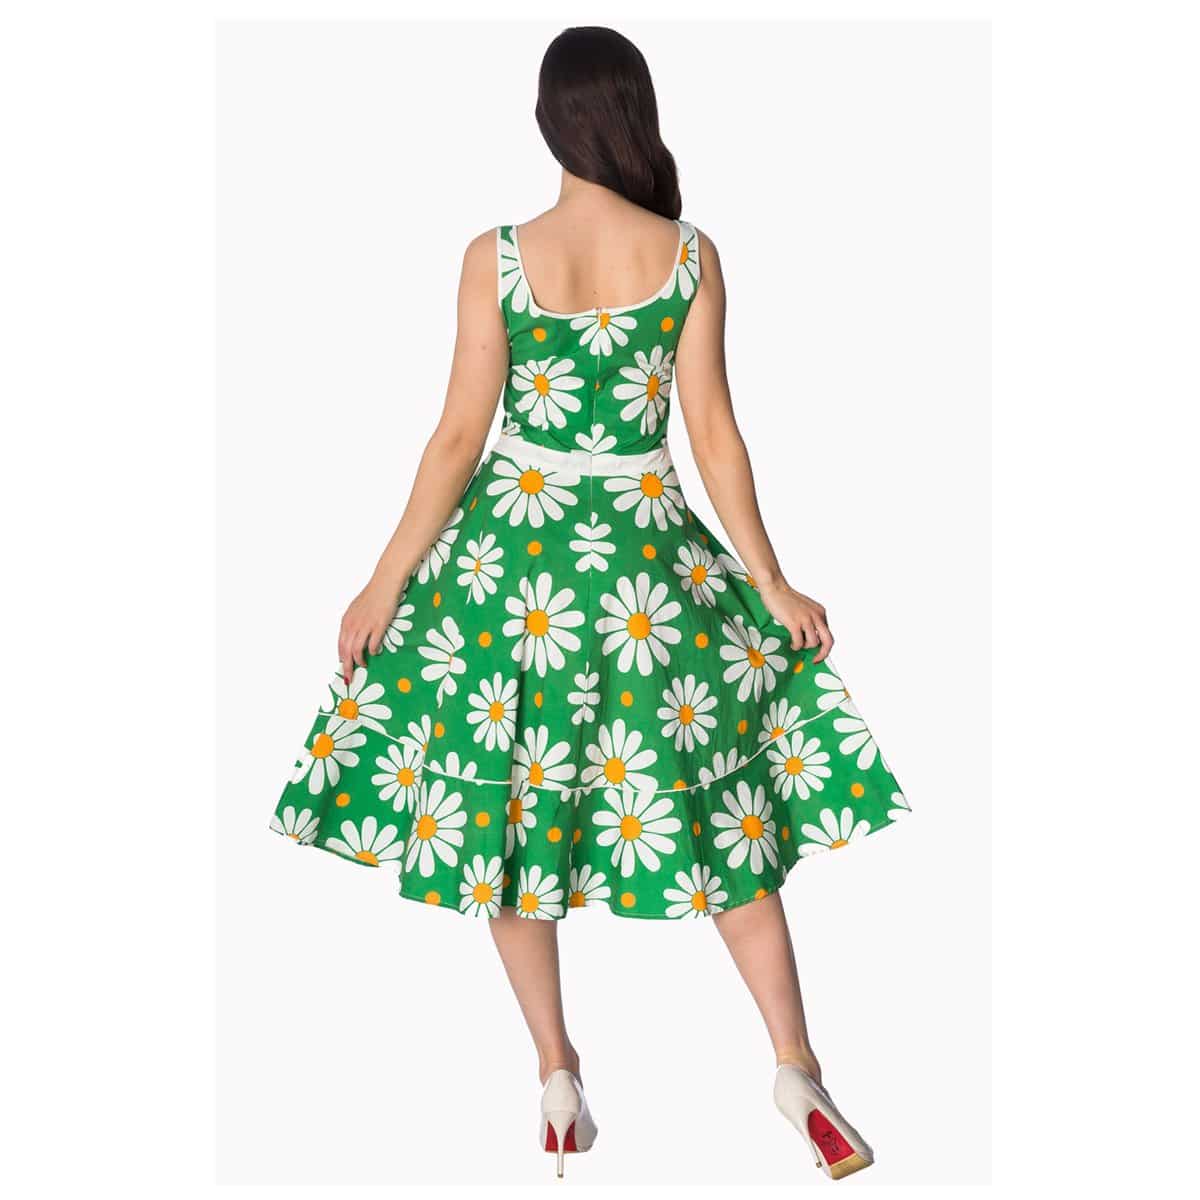 Daisy sommerkjole | 70 talls kjole | RiffRaff.no